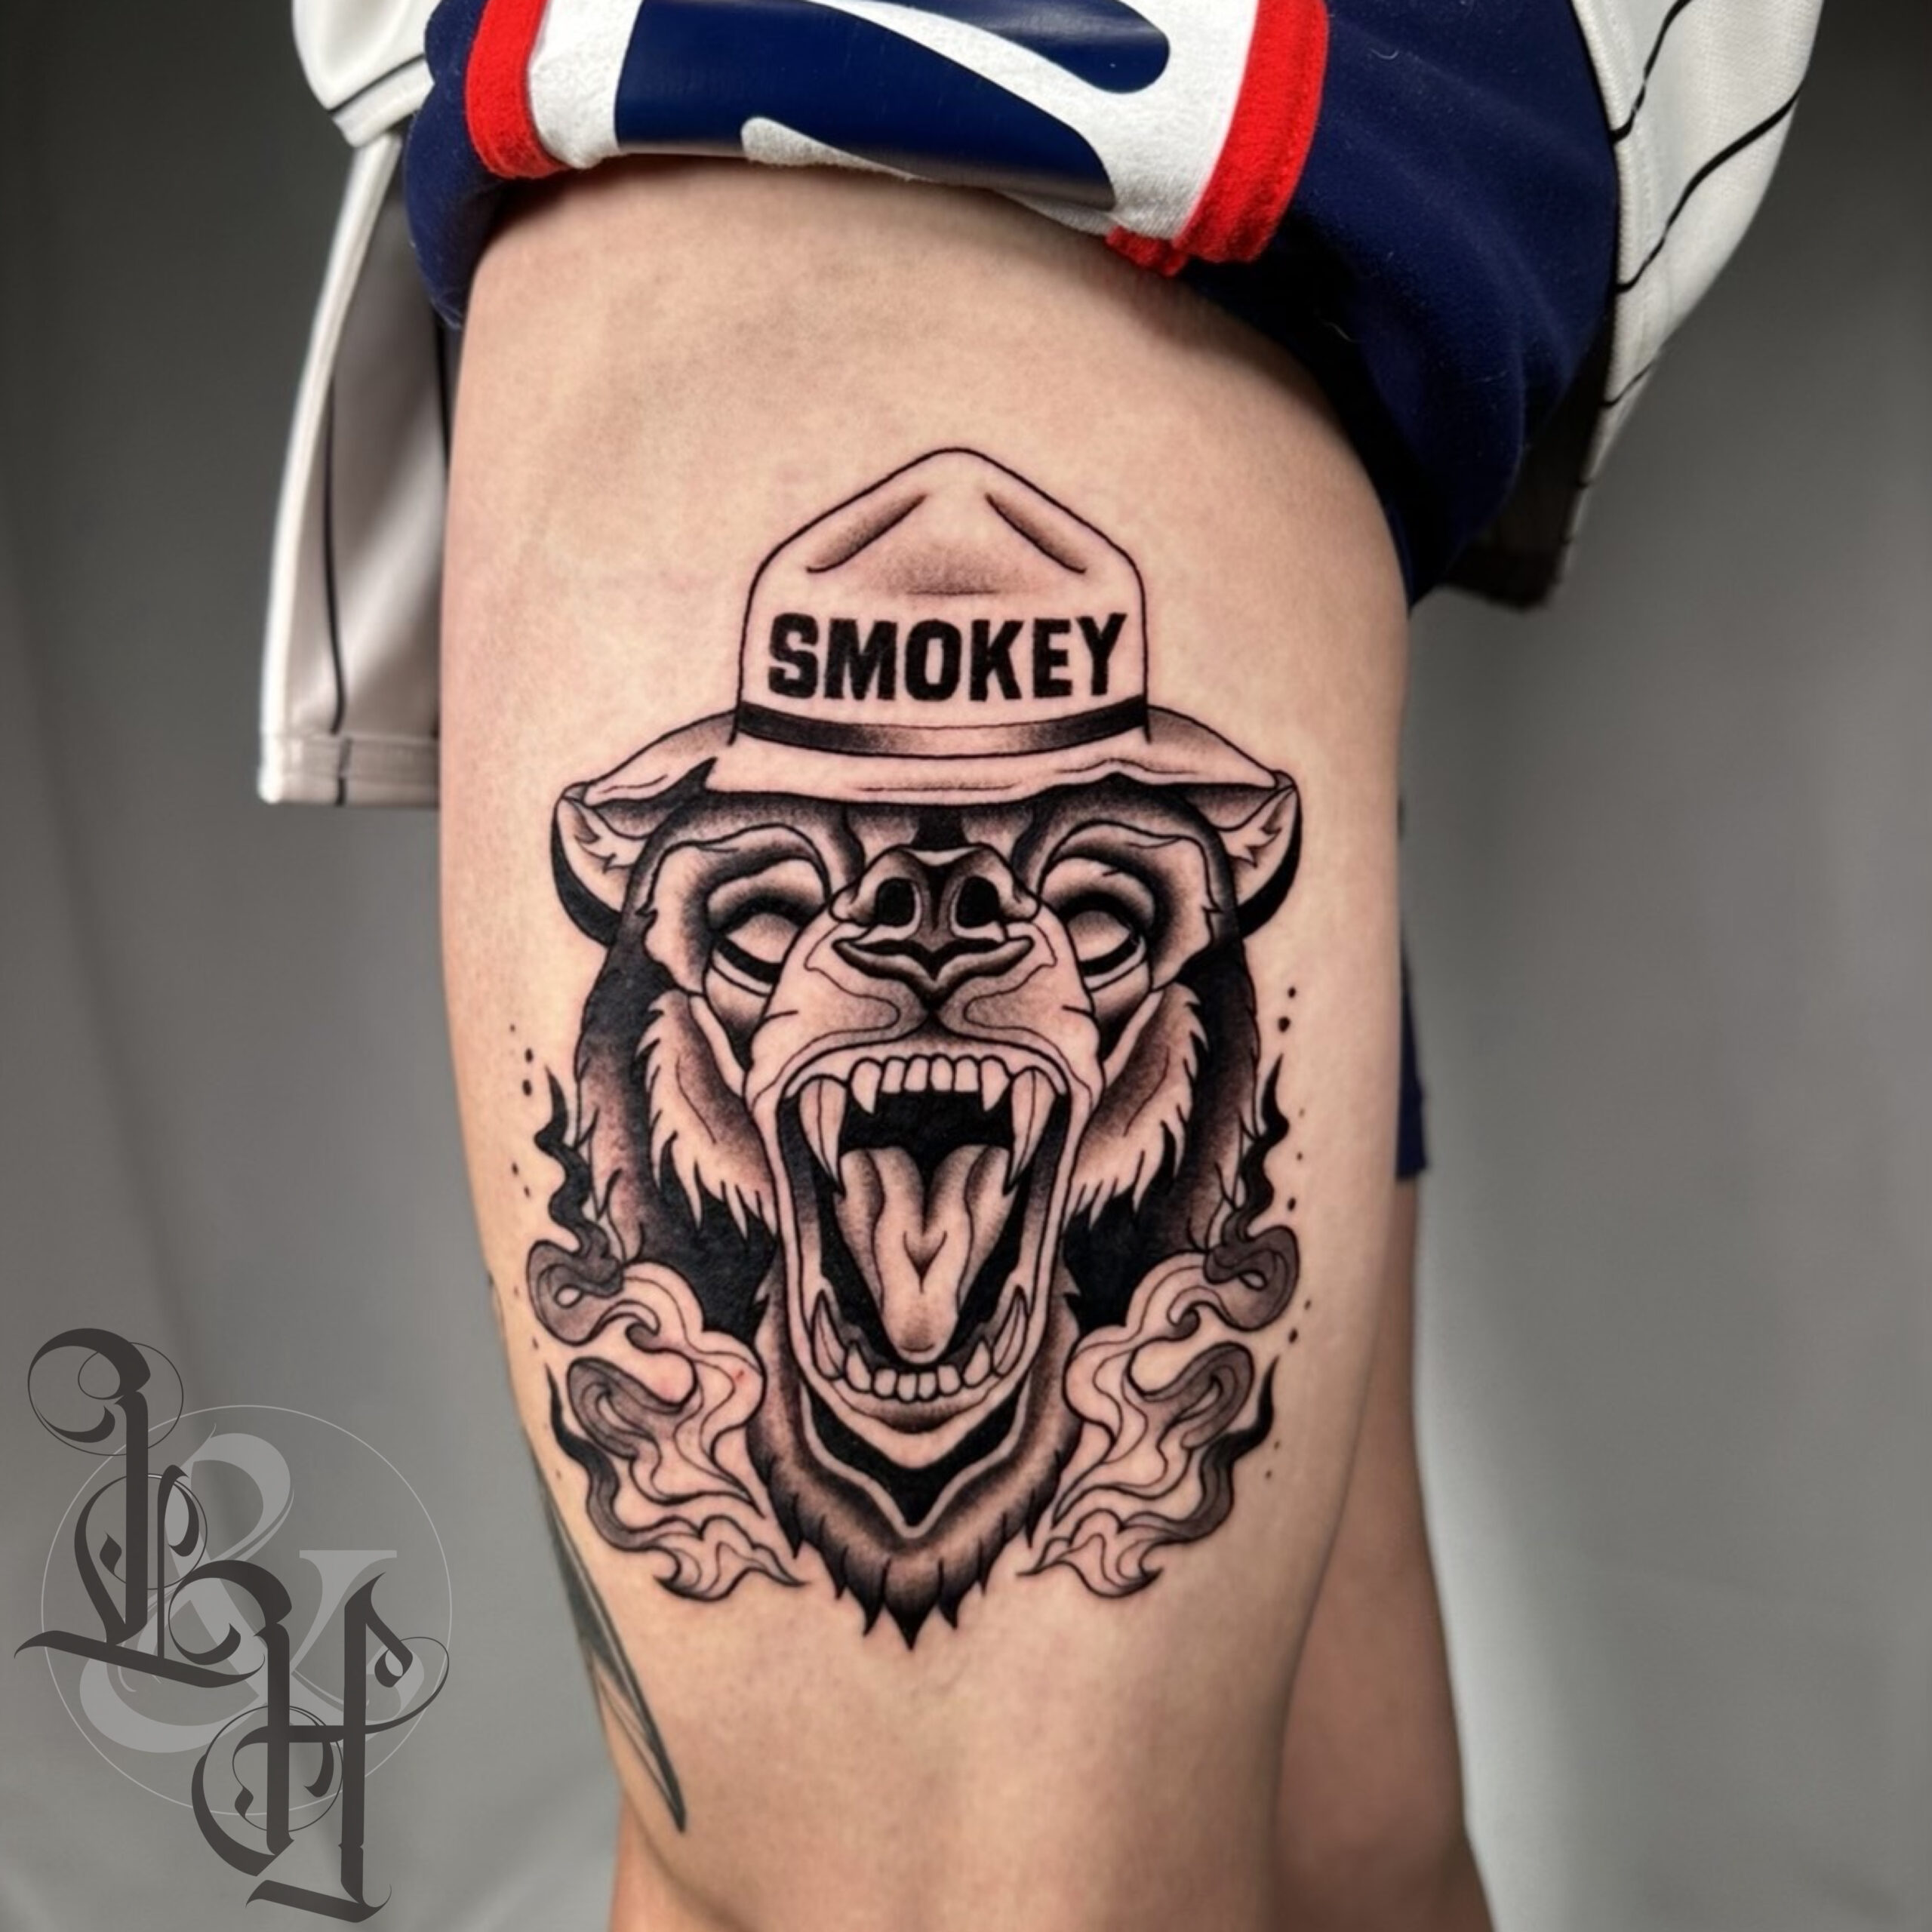 Steel and Ink Tattoo Studio on Twitter Smokey the bear tattoo by Jay at  steelandinkstudio tattoos Ink StLouis httpstcoRBmUVmlTBr  Twitter